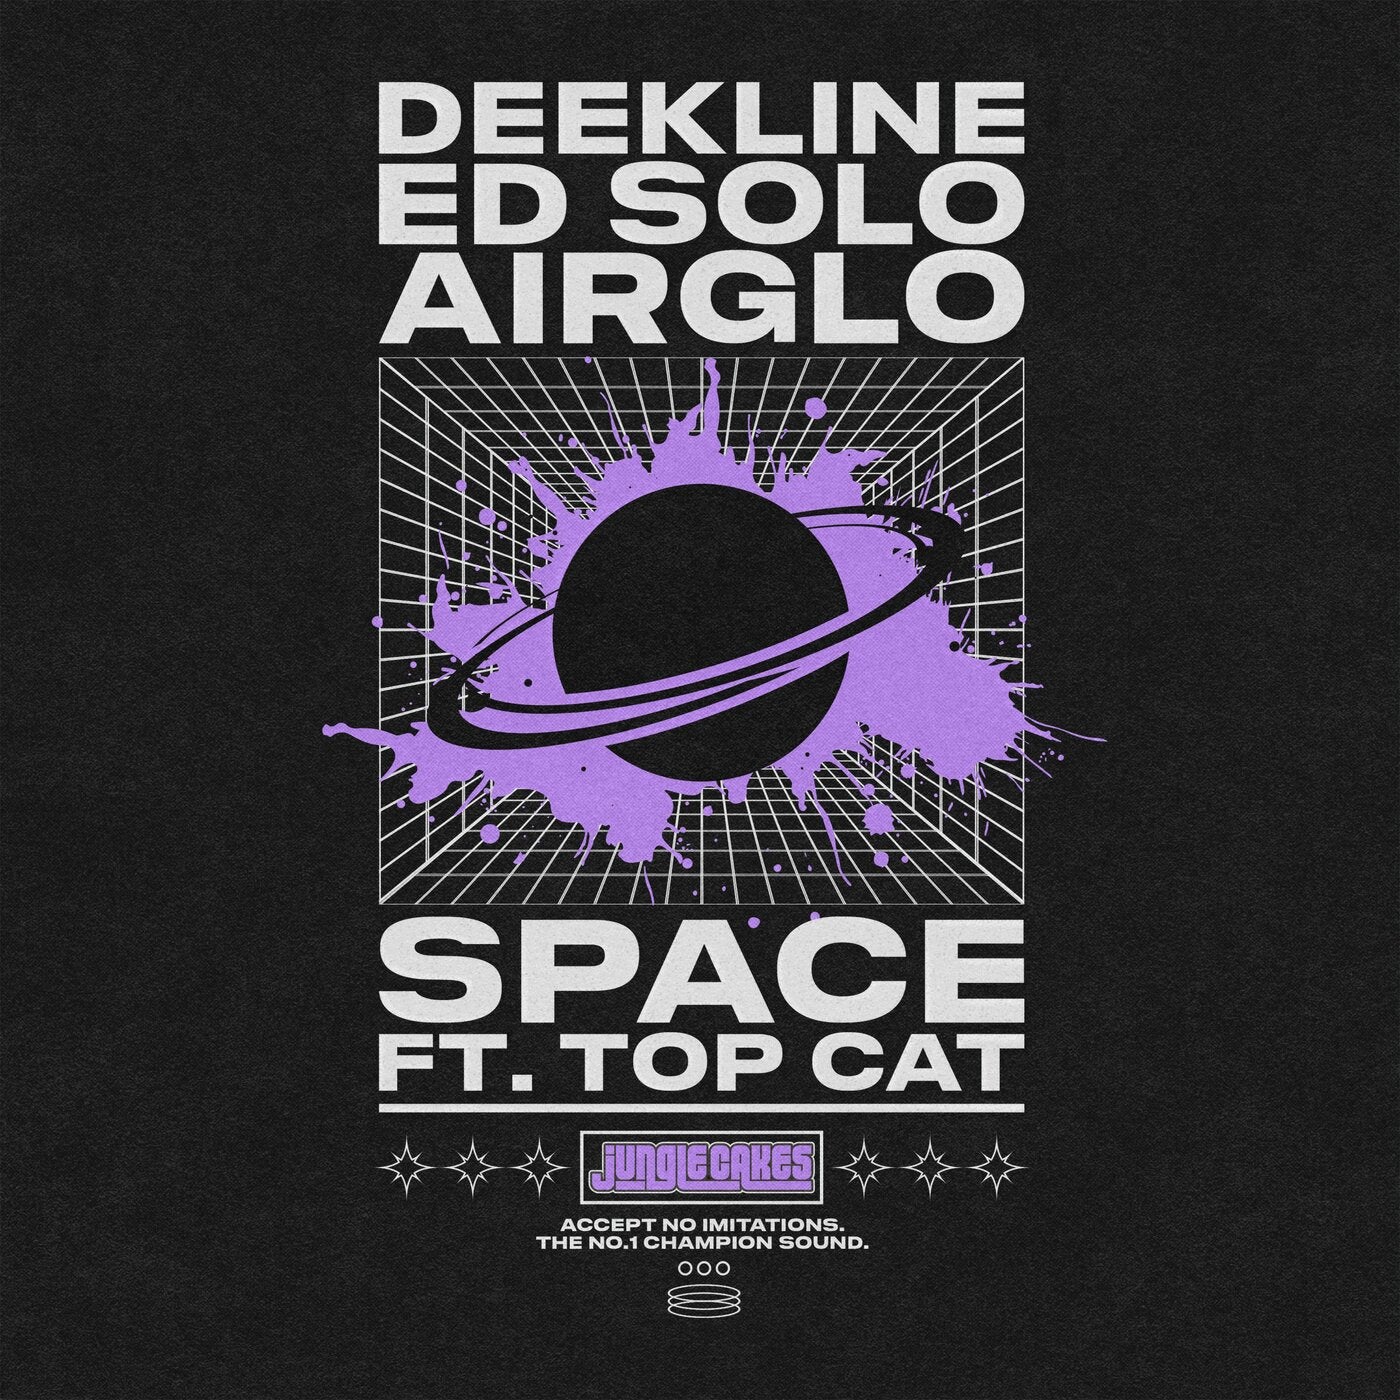 Space (Original Mix)